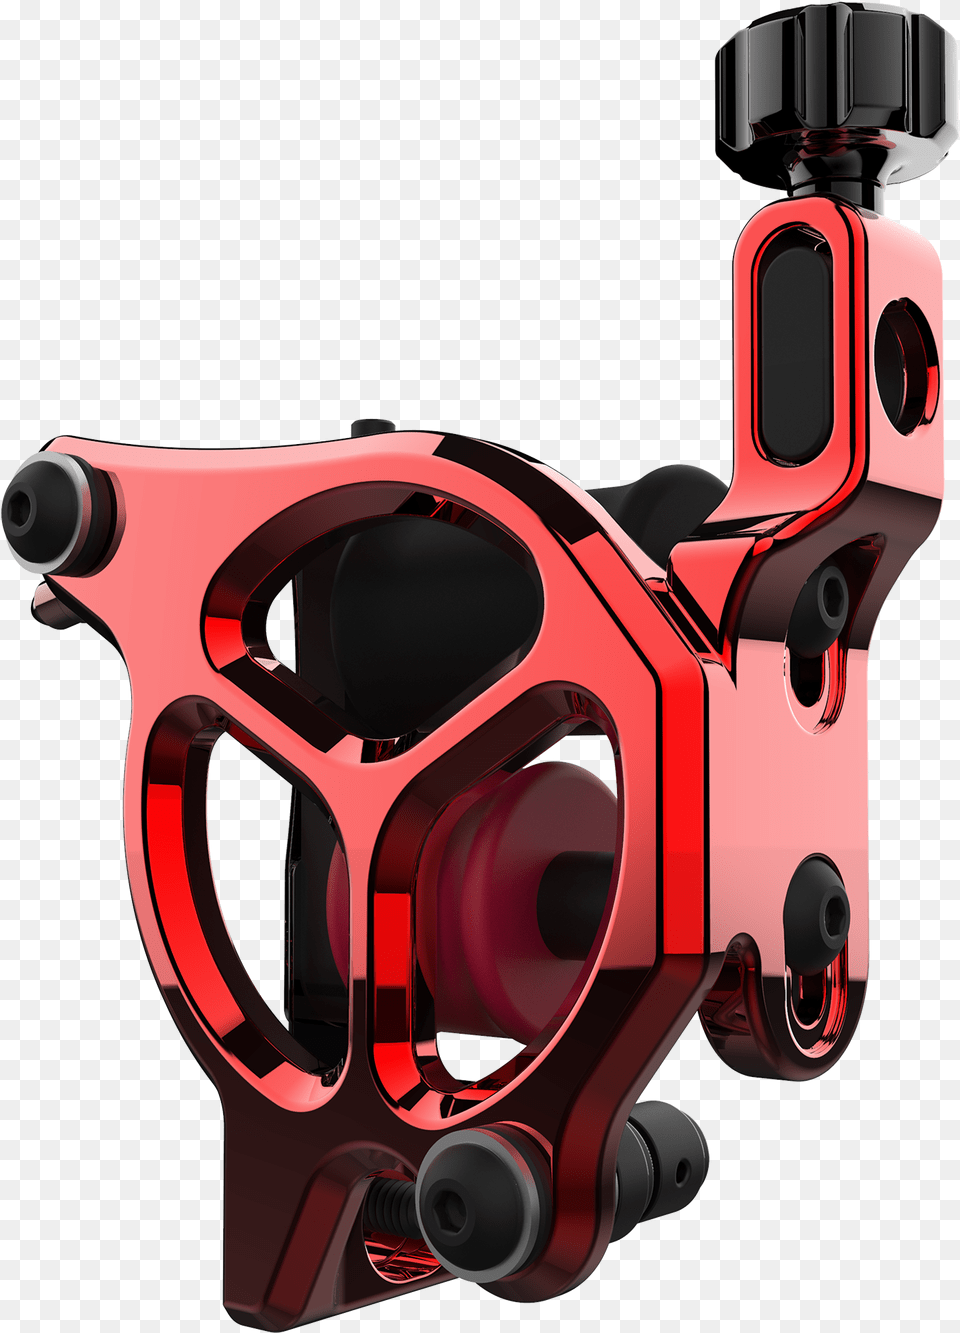 Galaxie Iii Tangerine Fk Iron Coil Machine, Firearm, Gun, Rifle, Weapon Free Transparent Png